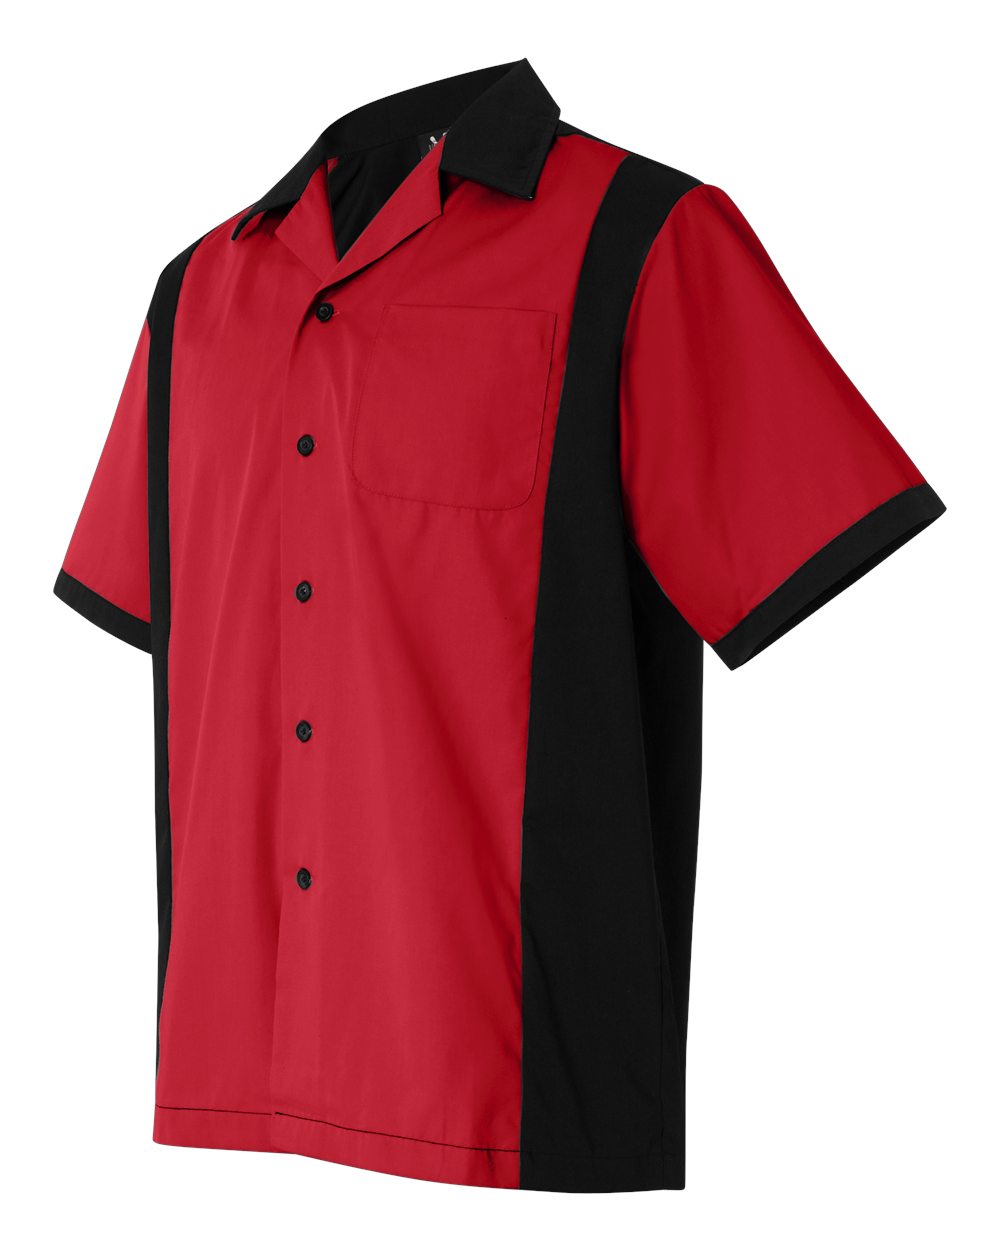 Hilton HP2243 Bowling Shirt Red Custom Text or Design